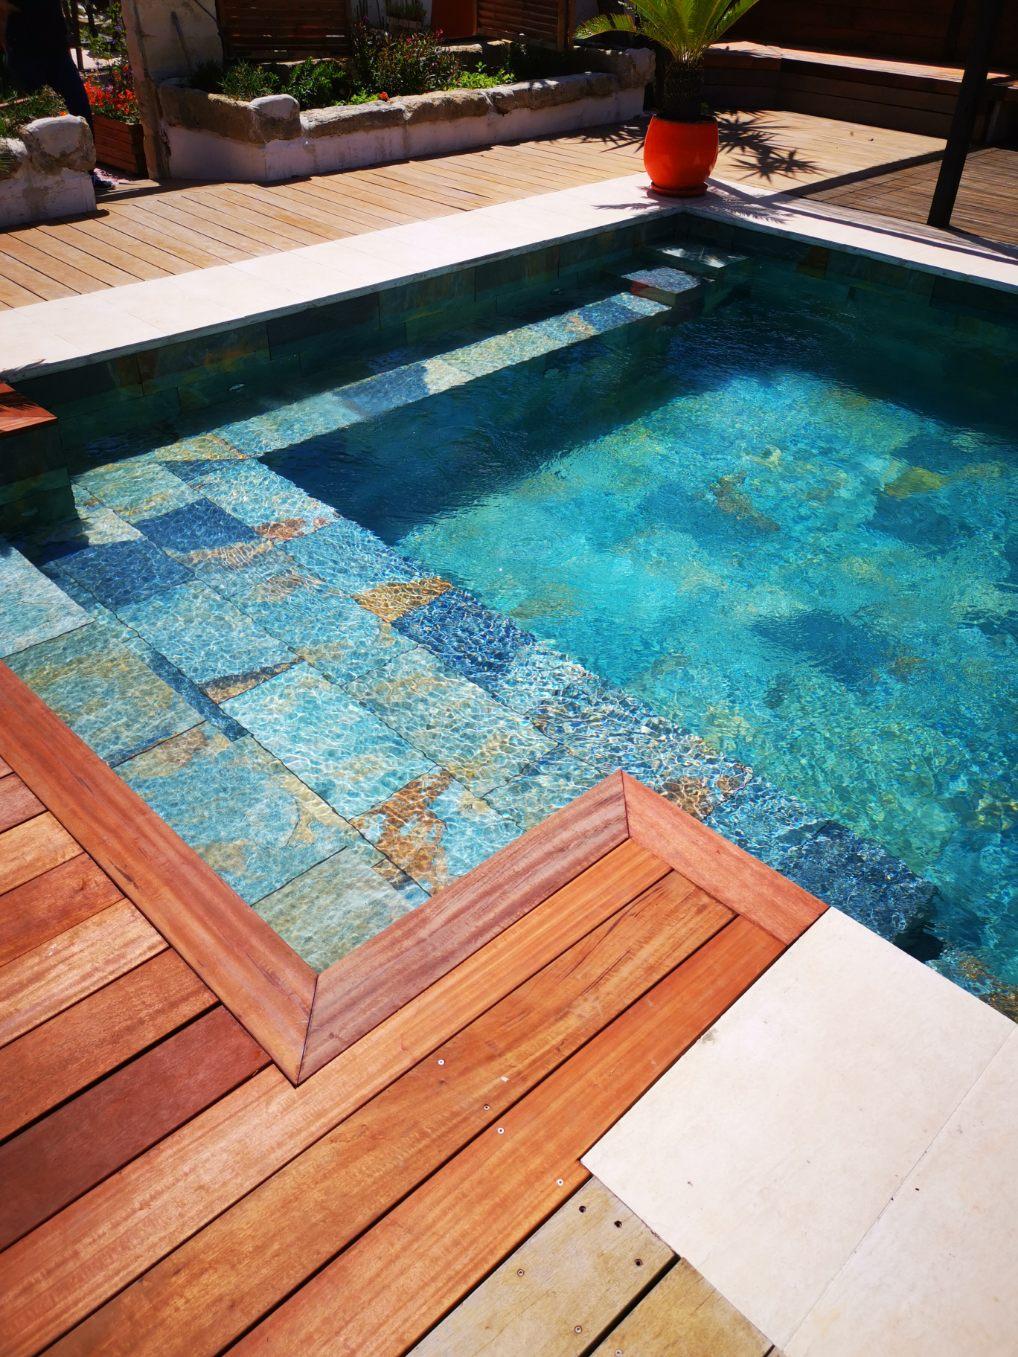 Lot de 23.76 m² - Carrelage piscine effet pierre naturelle FIDJI 15x15 cm R9 - 23.76 m² - 2